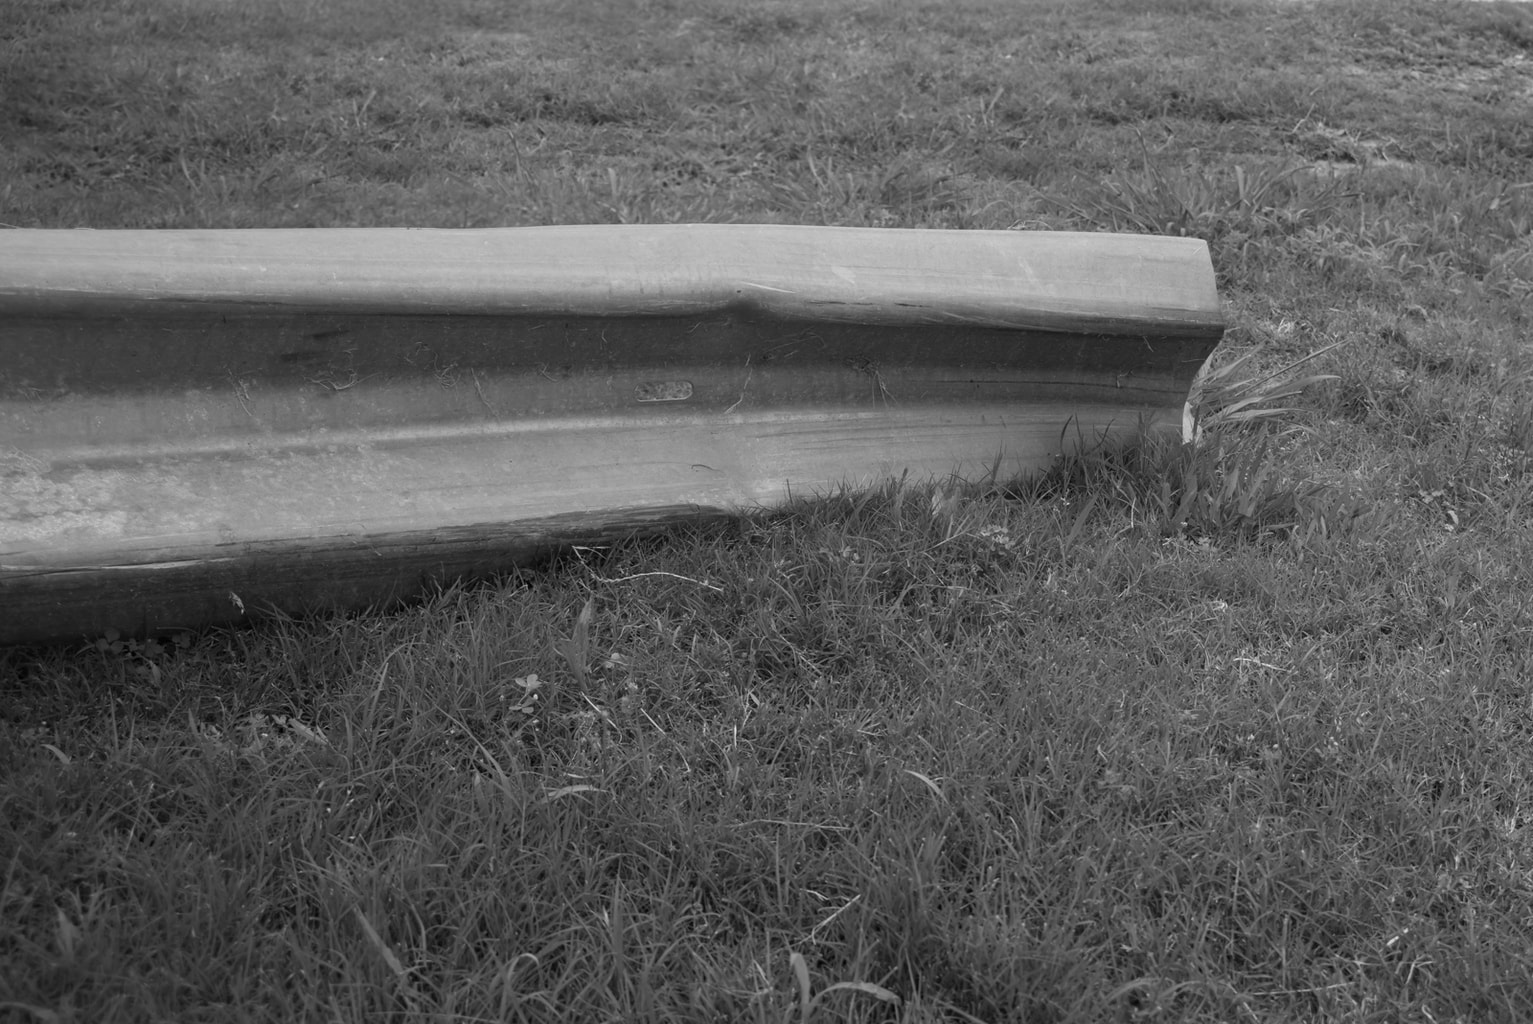 A guardrail sitting in the grass